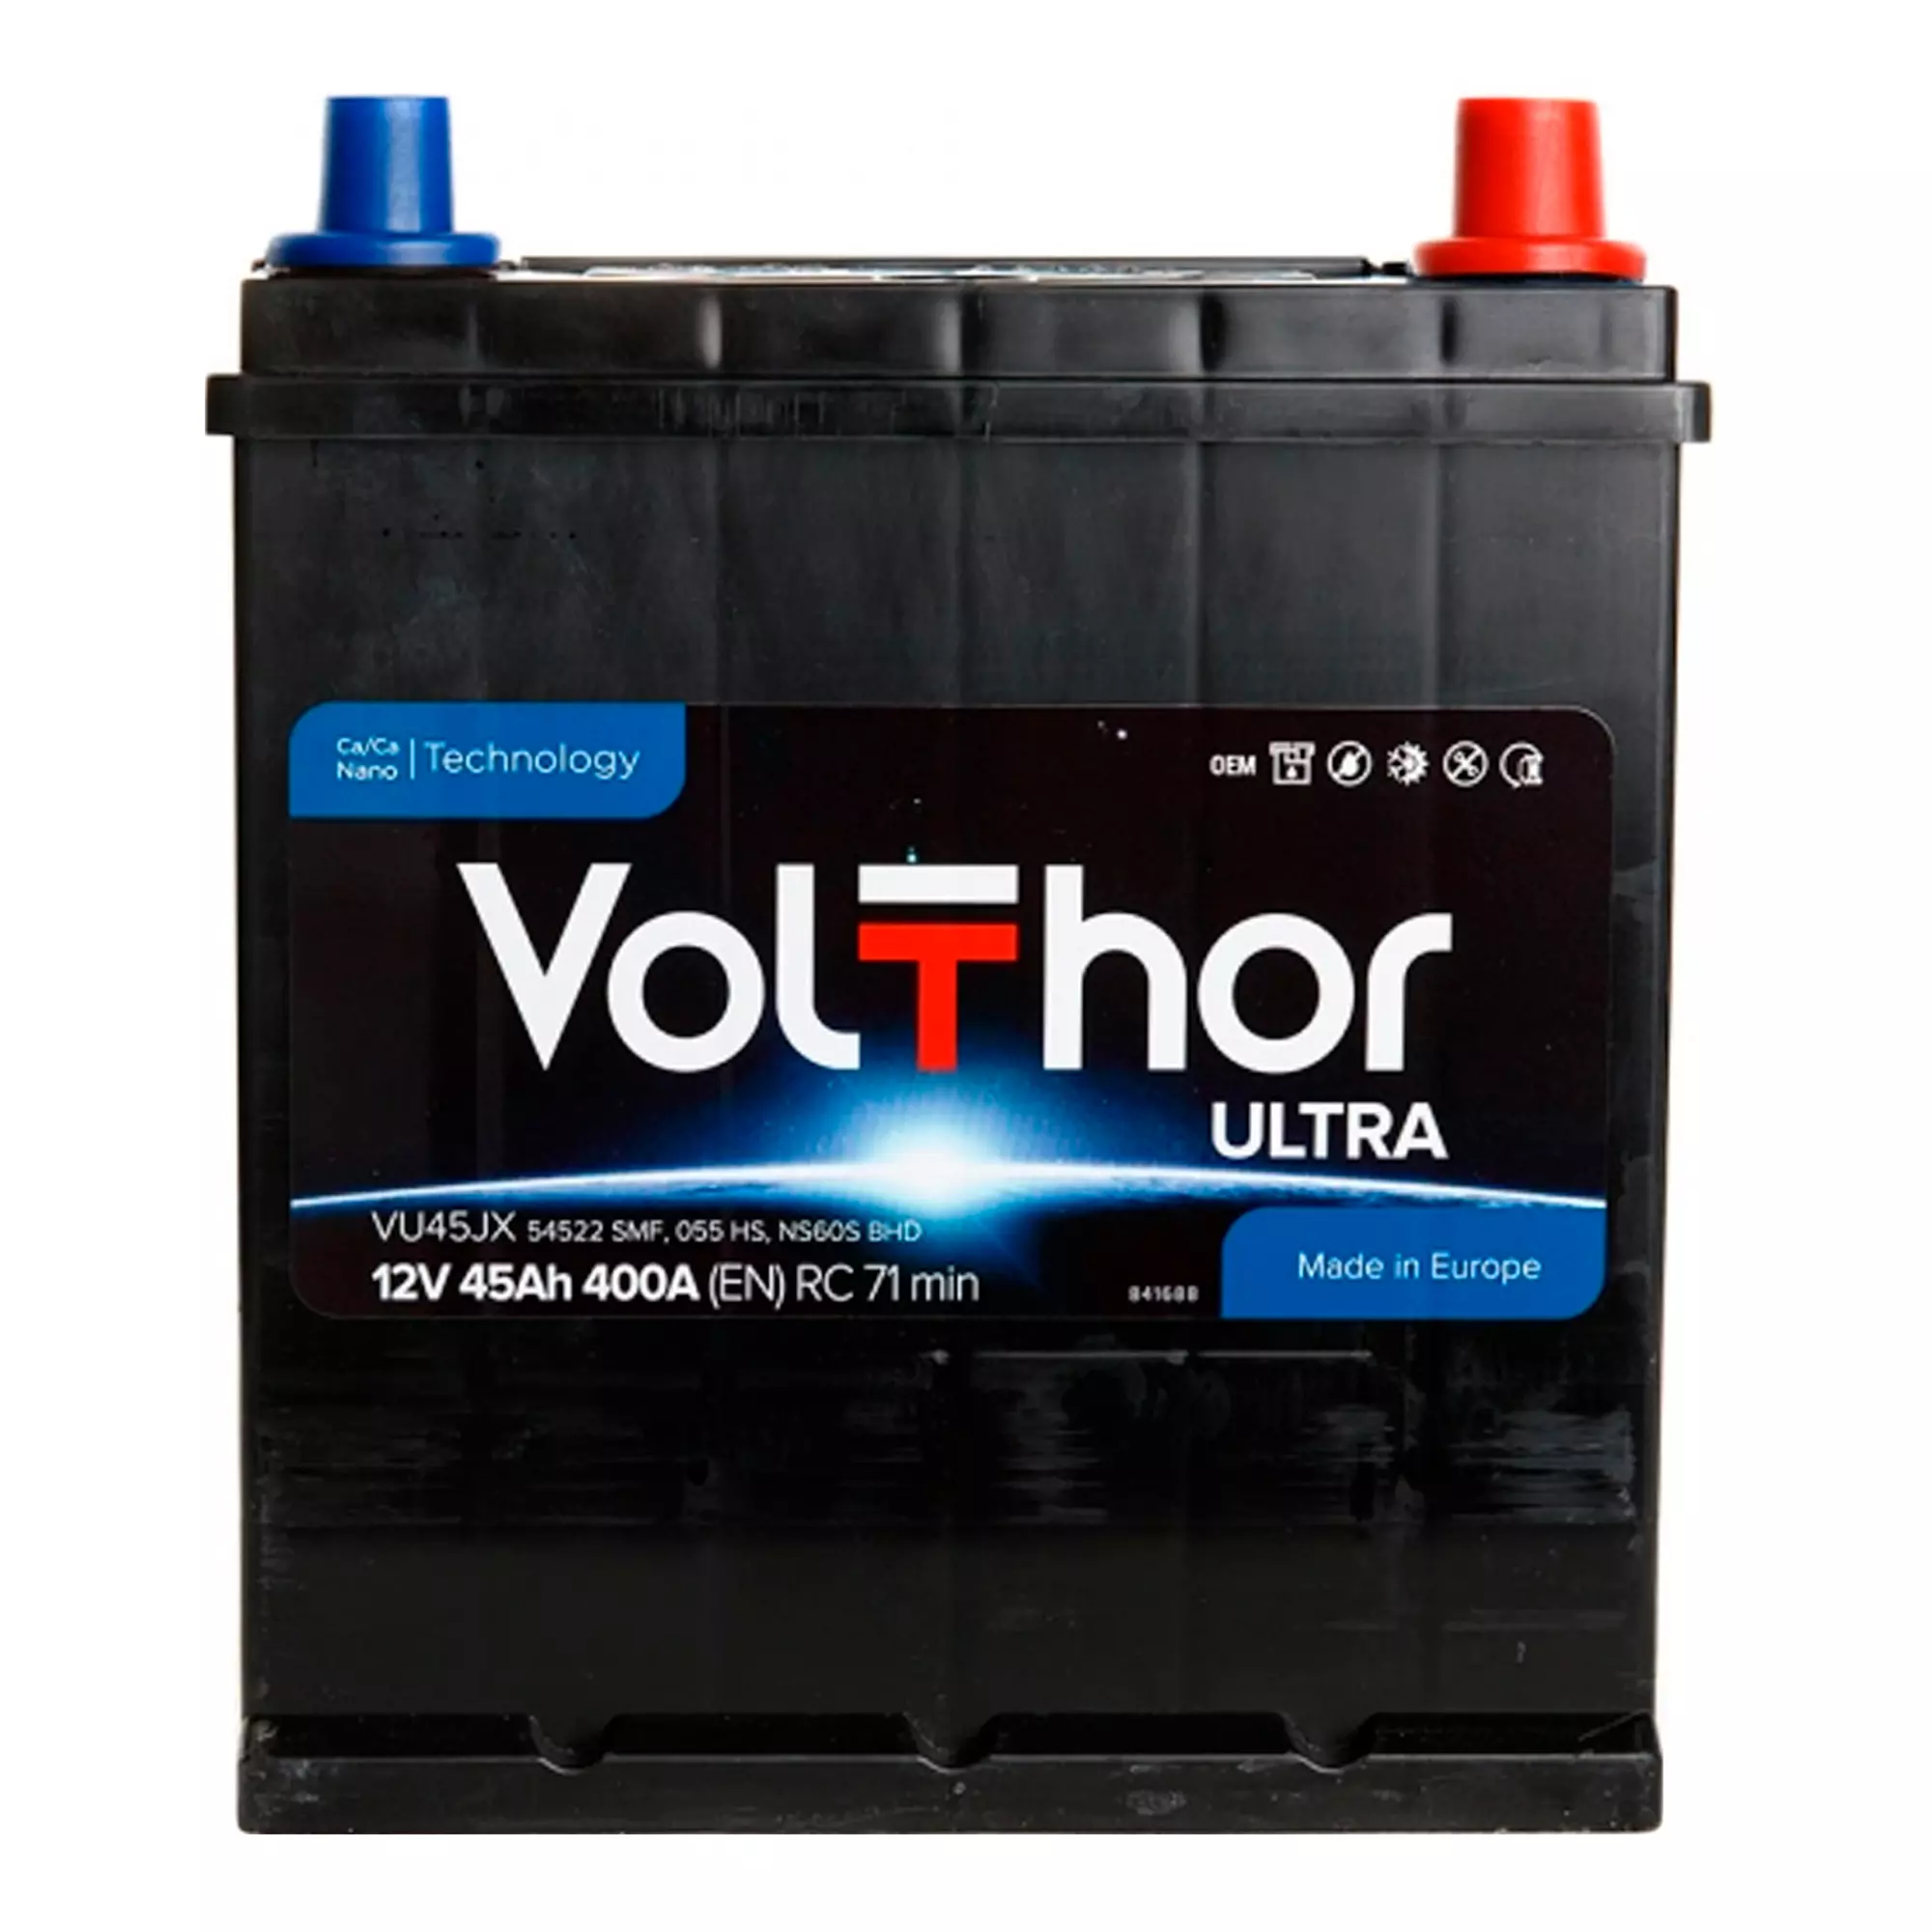 Автомобильный аккумулятор VOLTHOR 6СТ-45 АзЕ ASIA ULTRA (301246) (SMF)